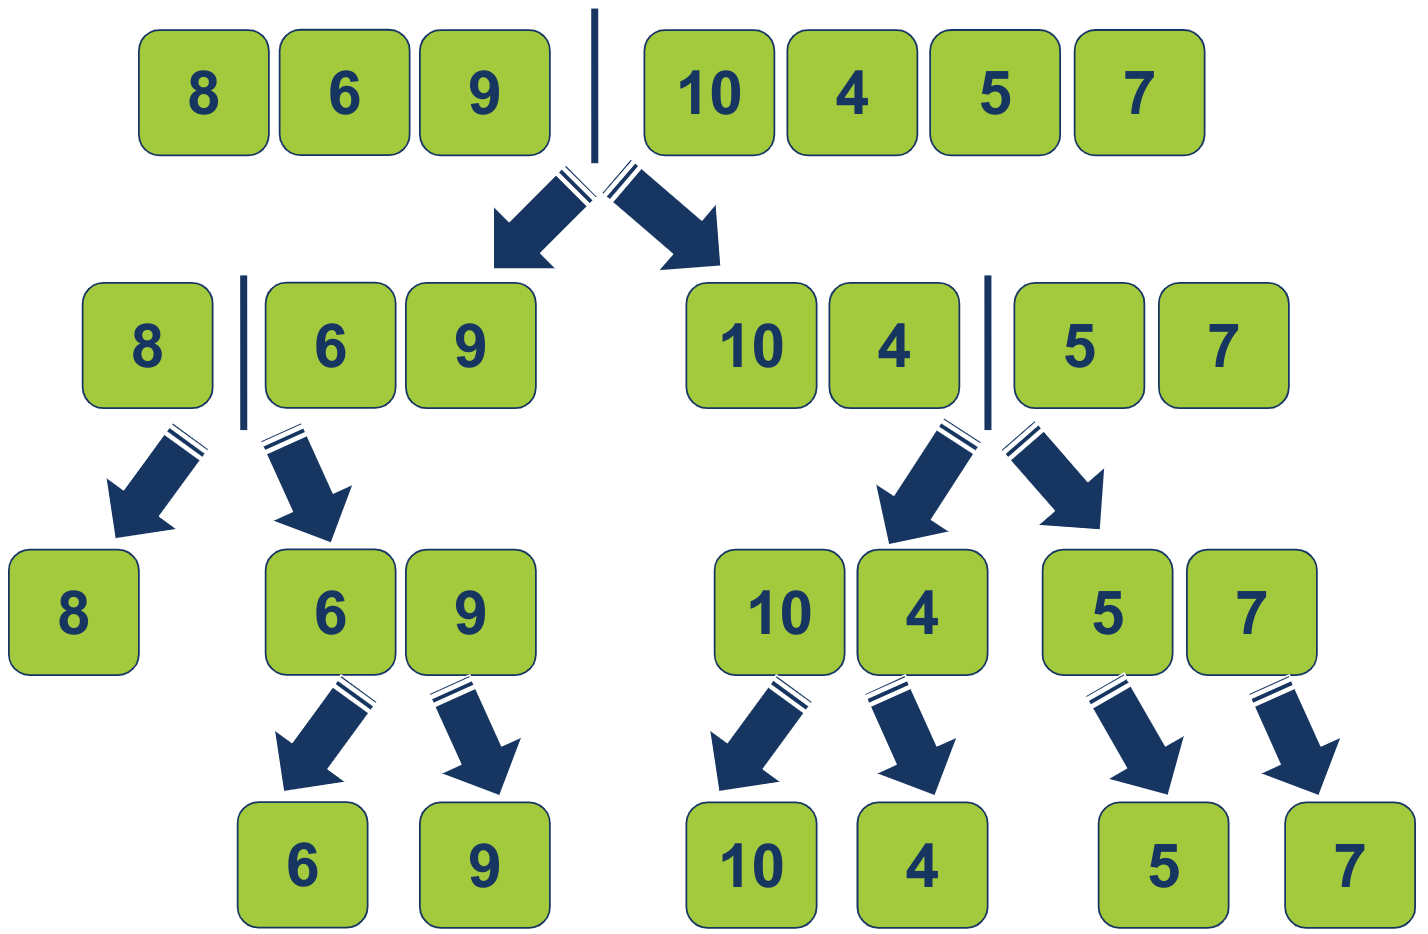 The last split makes an N number lists. Each with a single item: 8 vs 6 vs 9 vs 10 vs 4 vs 5 vs 7